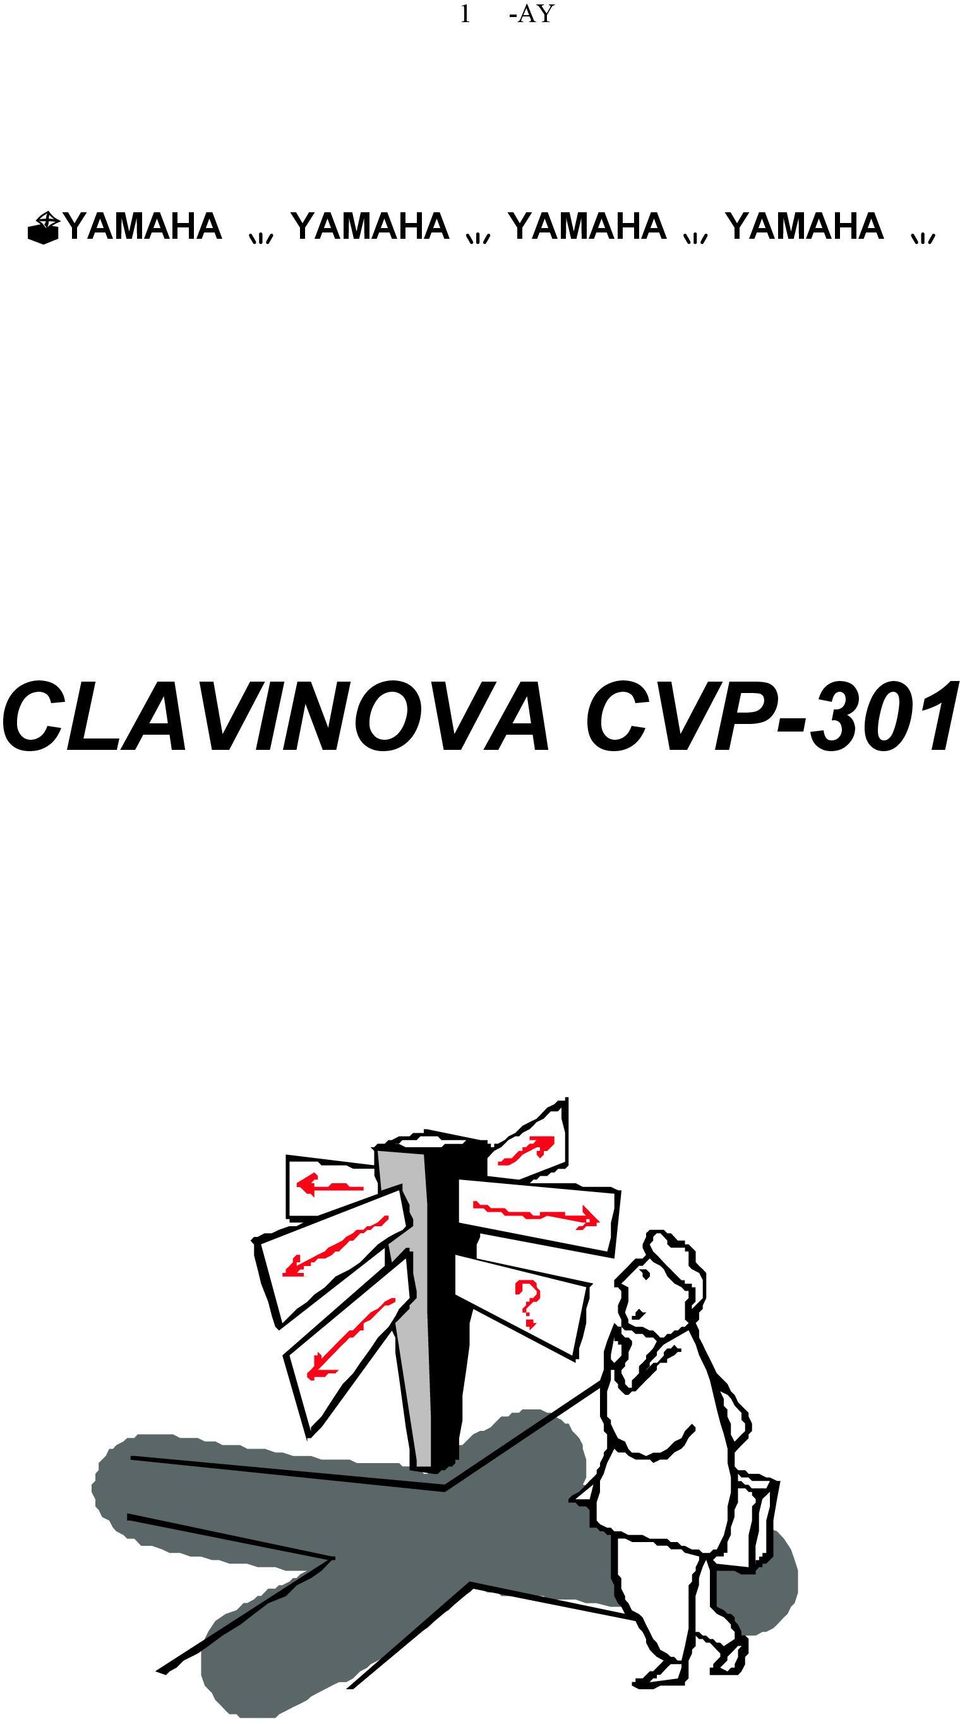 CLAVINOVA